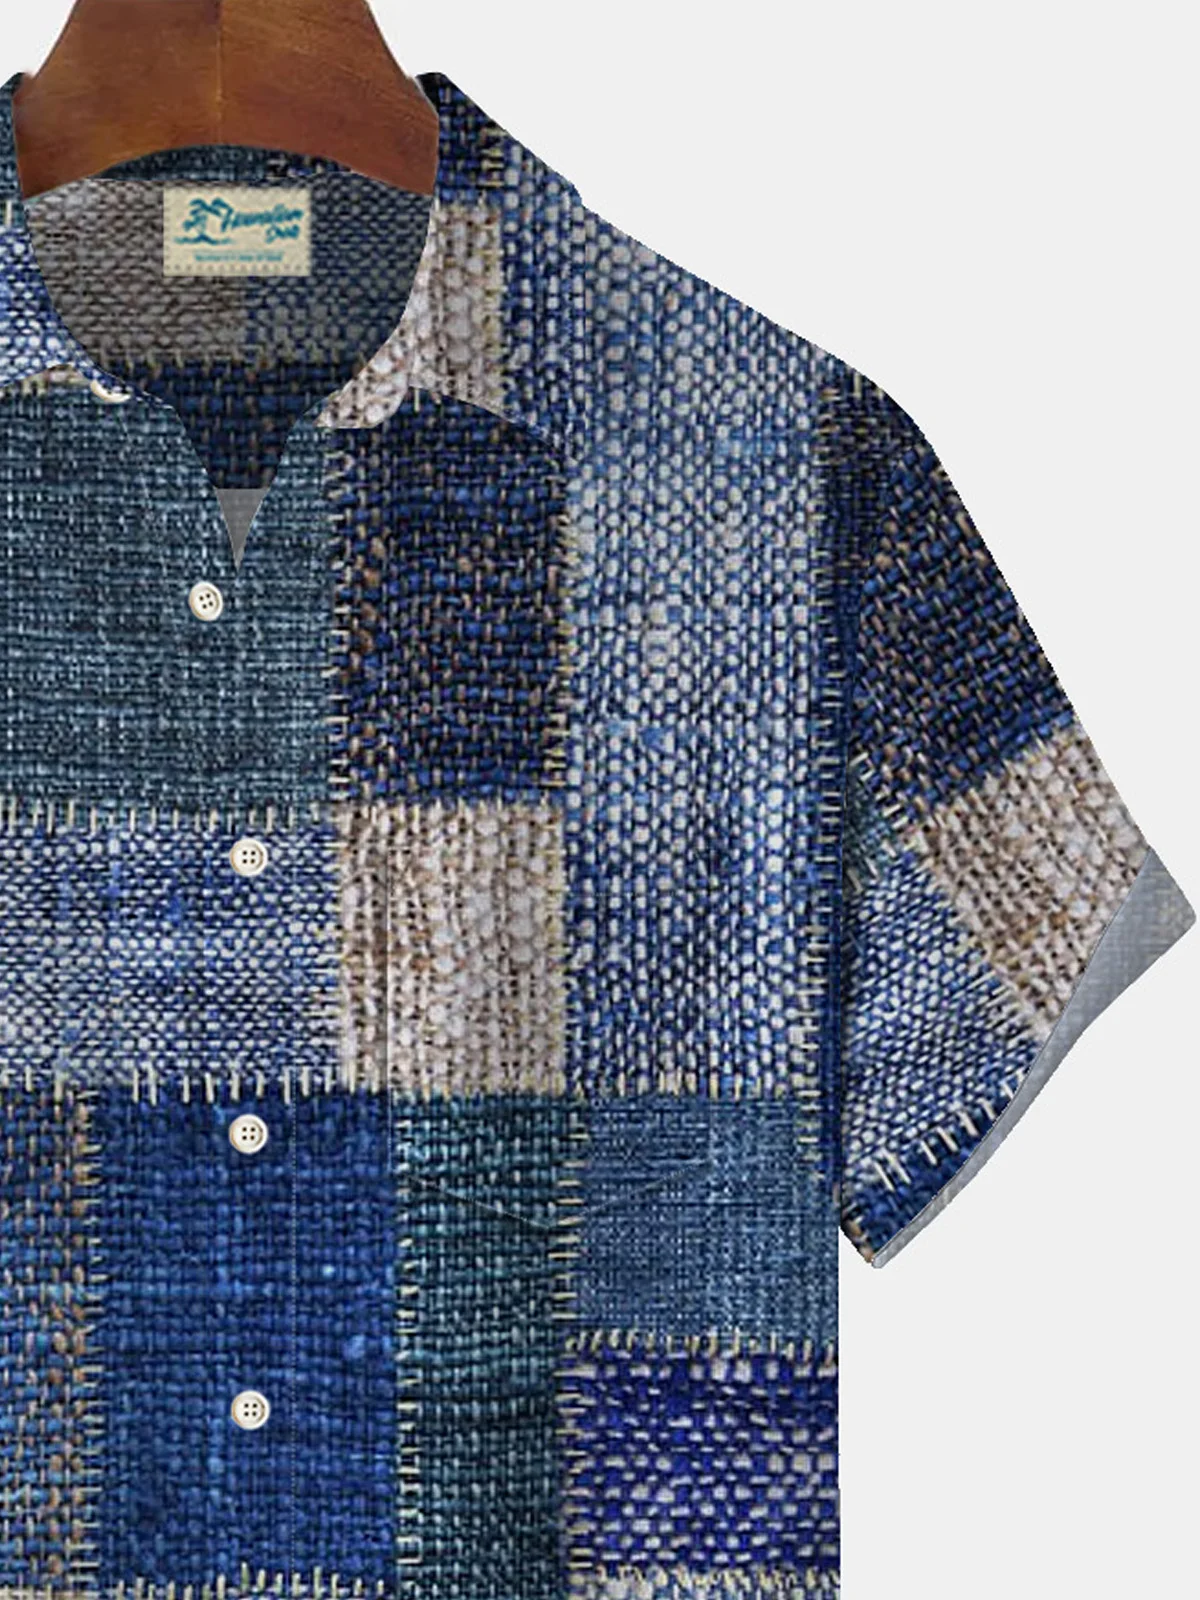 Royaura Retro Geometric Texture Men's Button Pocket Short Sleeve Shirt